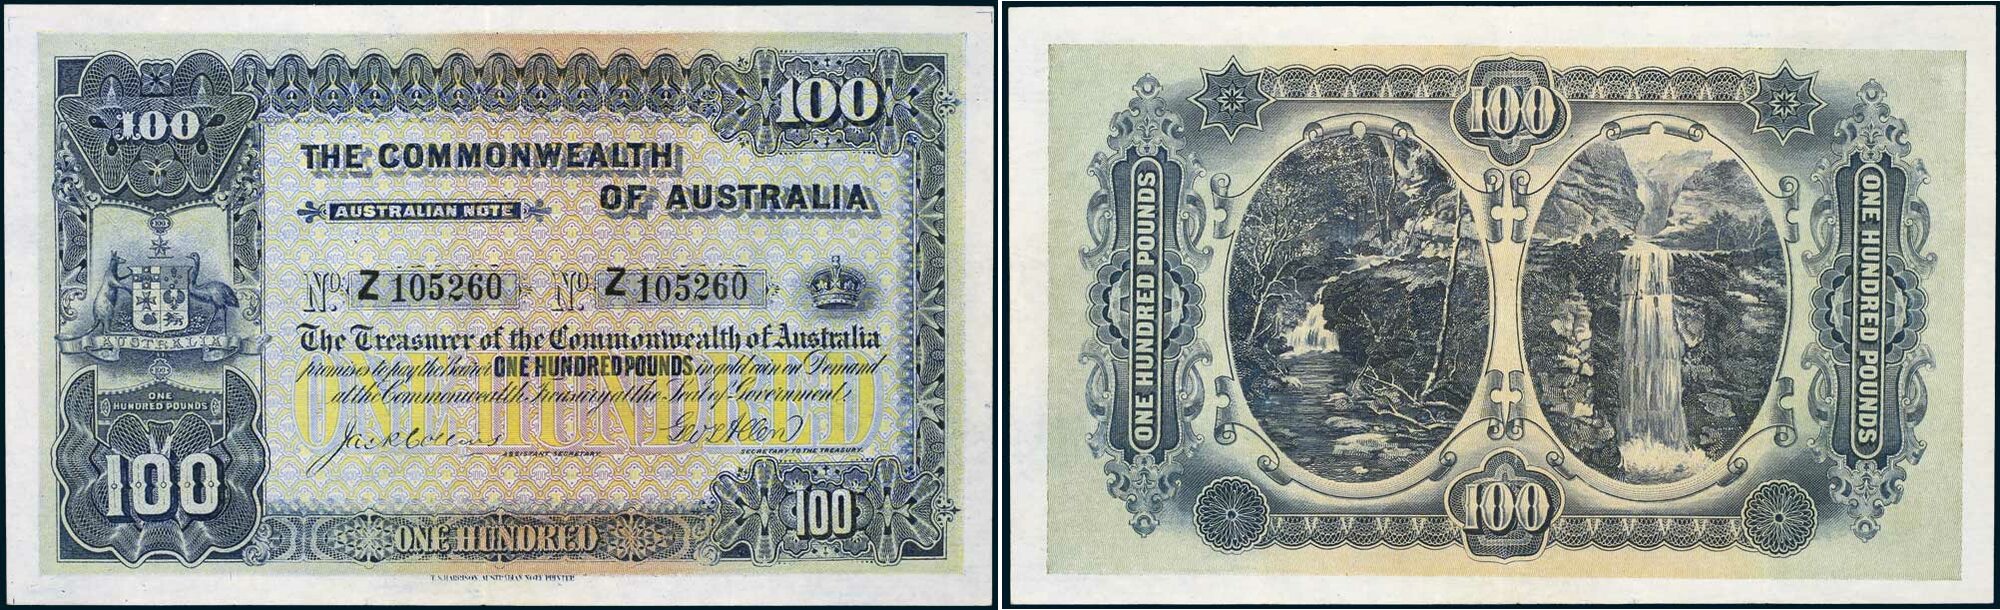 noble numismatics 1914 banknote